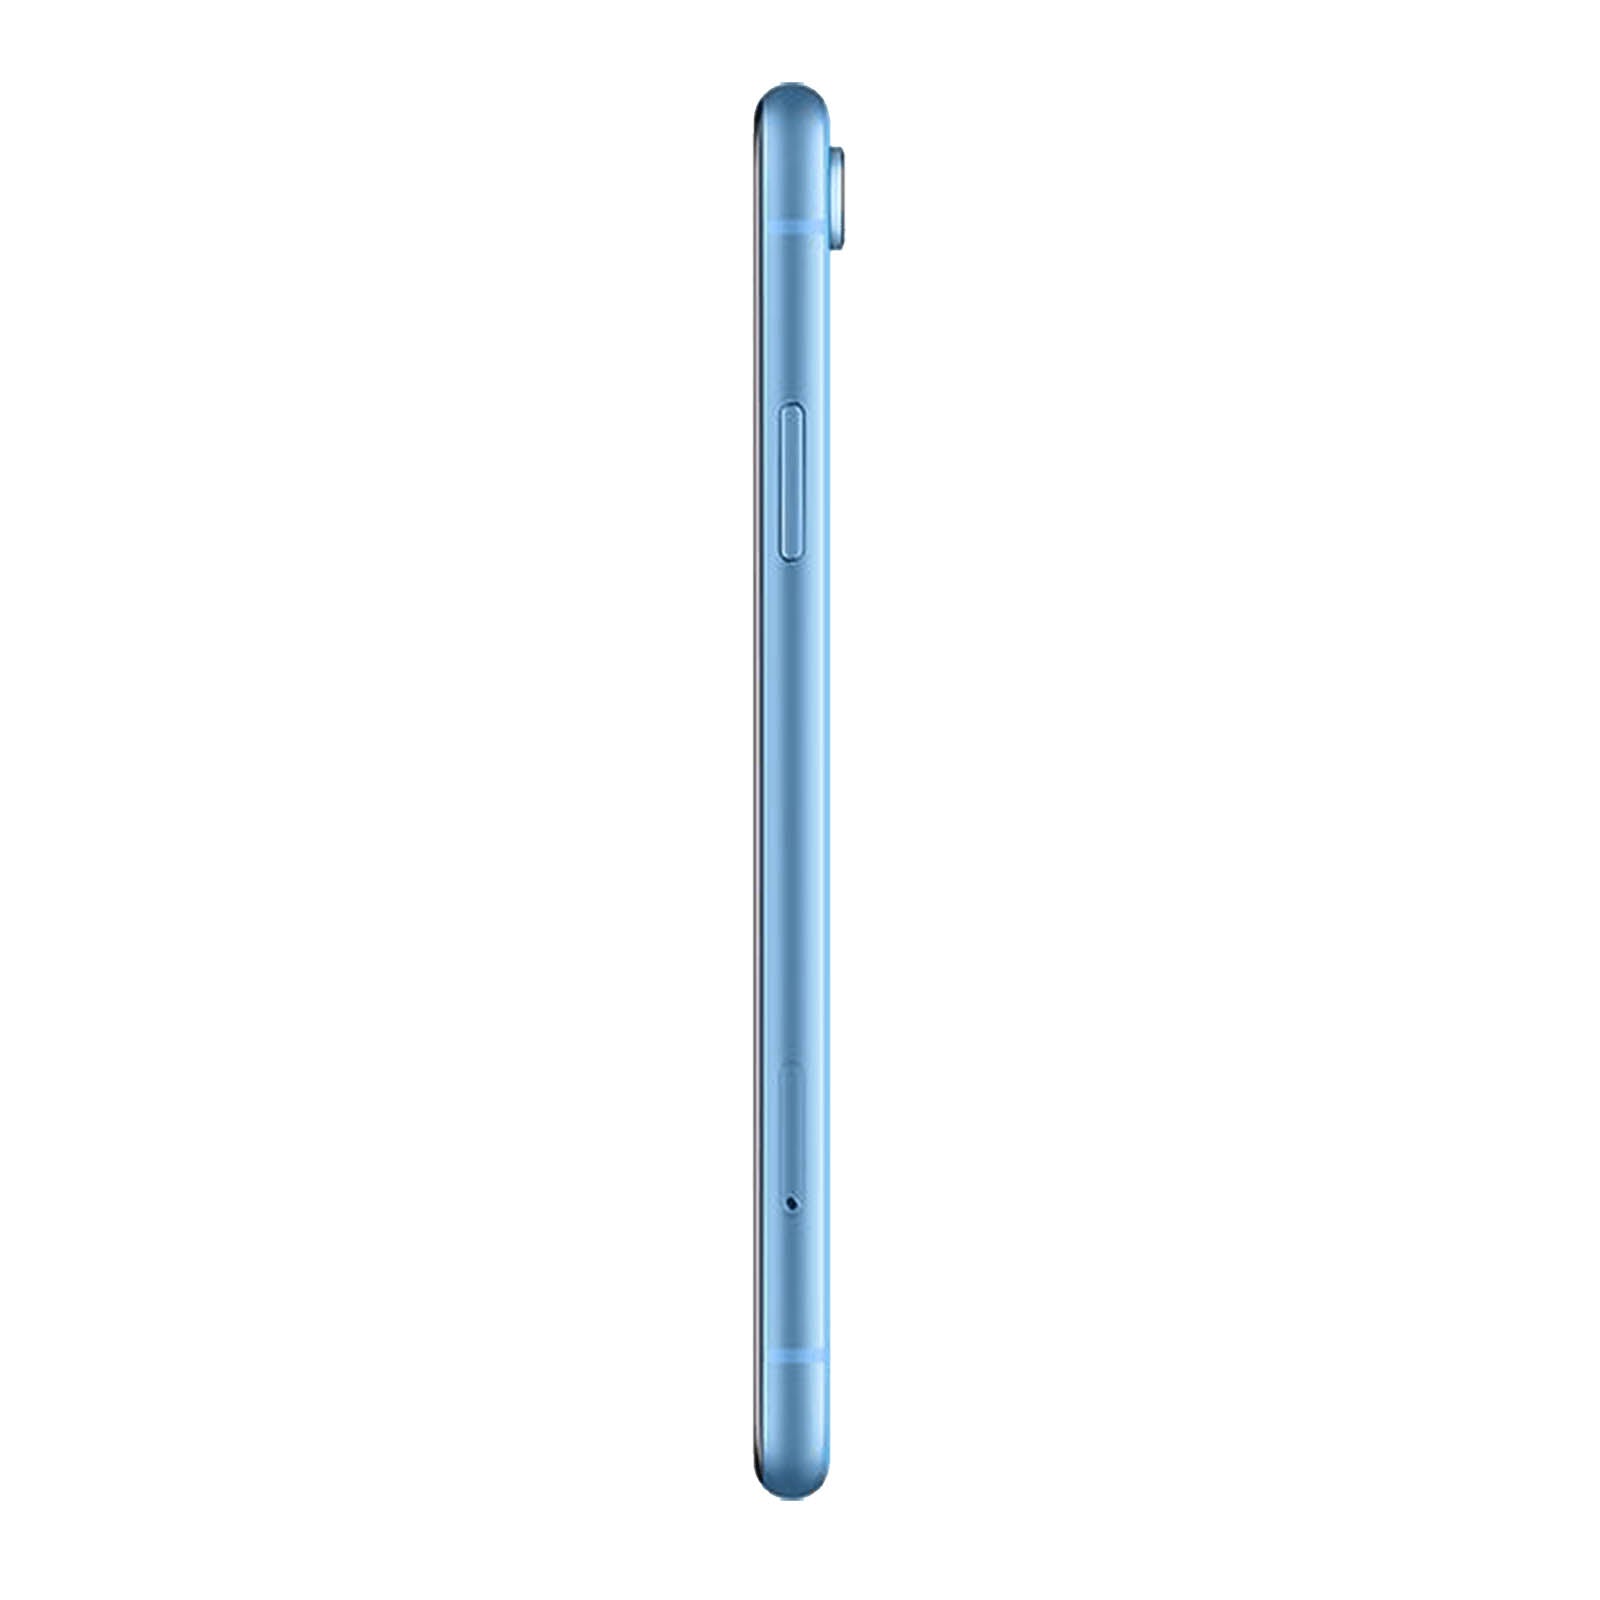 Apple iPhone XR 64GB Blue Pristine - T-Mobile